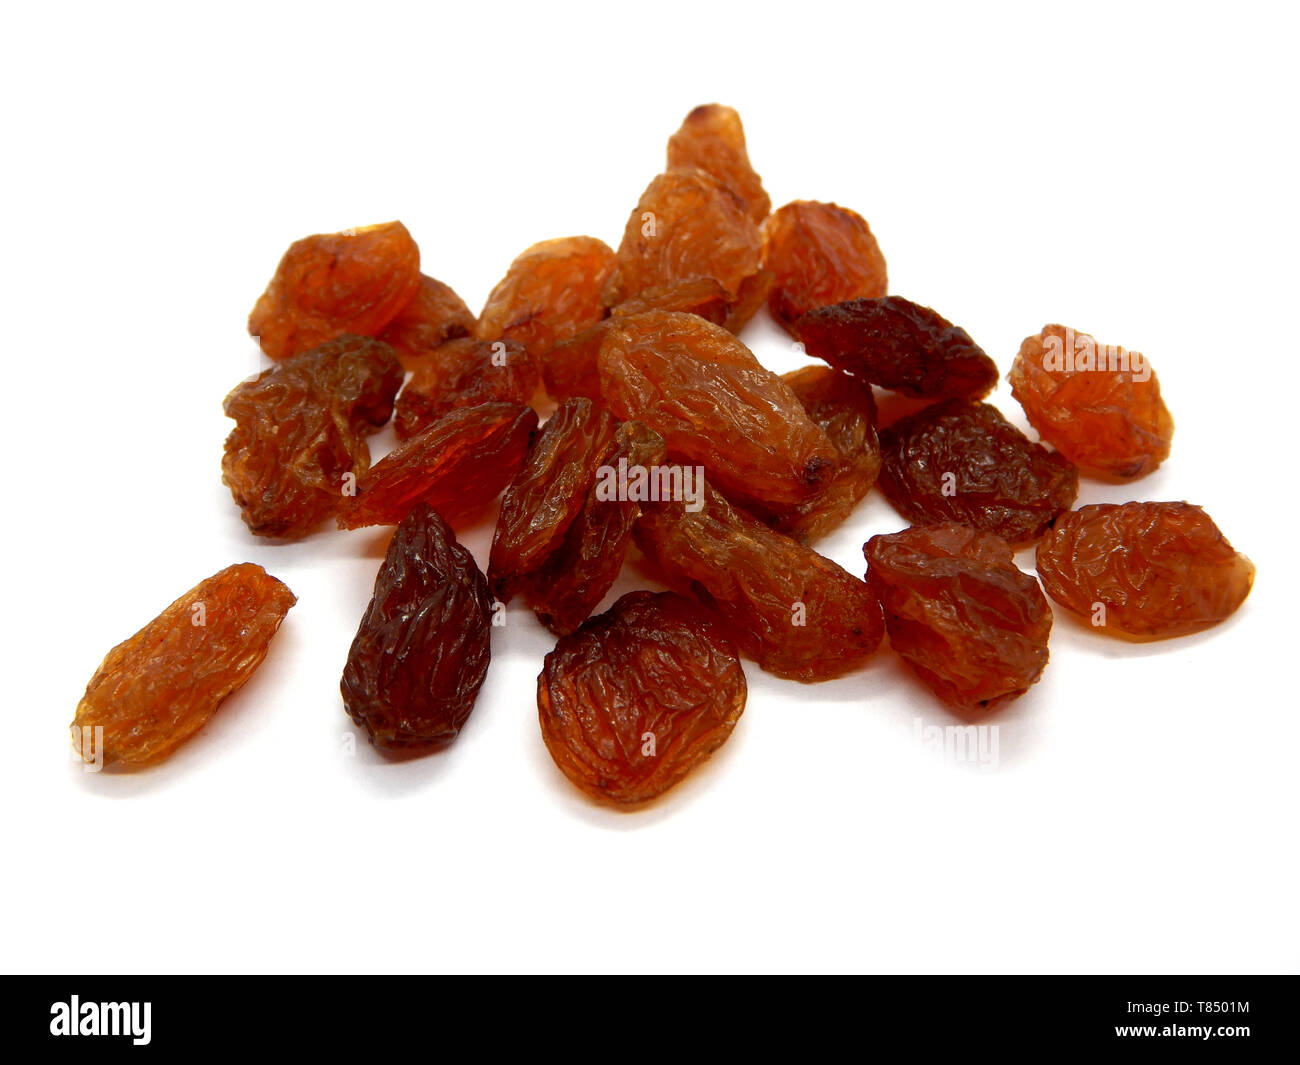 dried sultana fruits on white background Stock Photo - Alamy